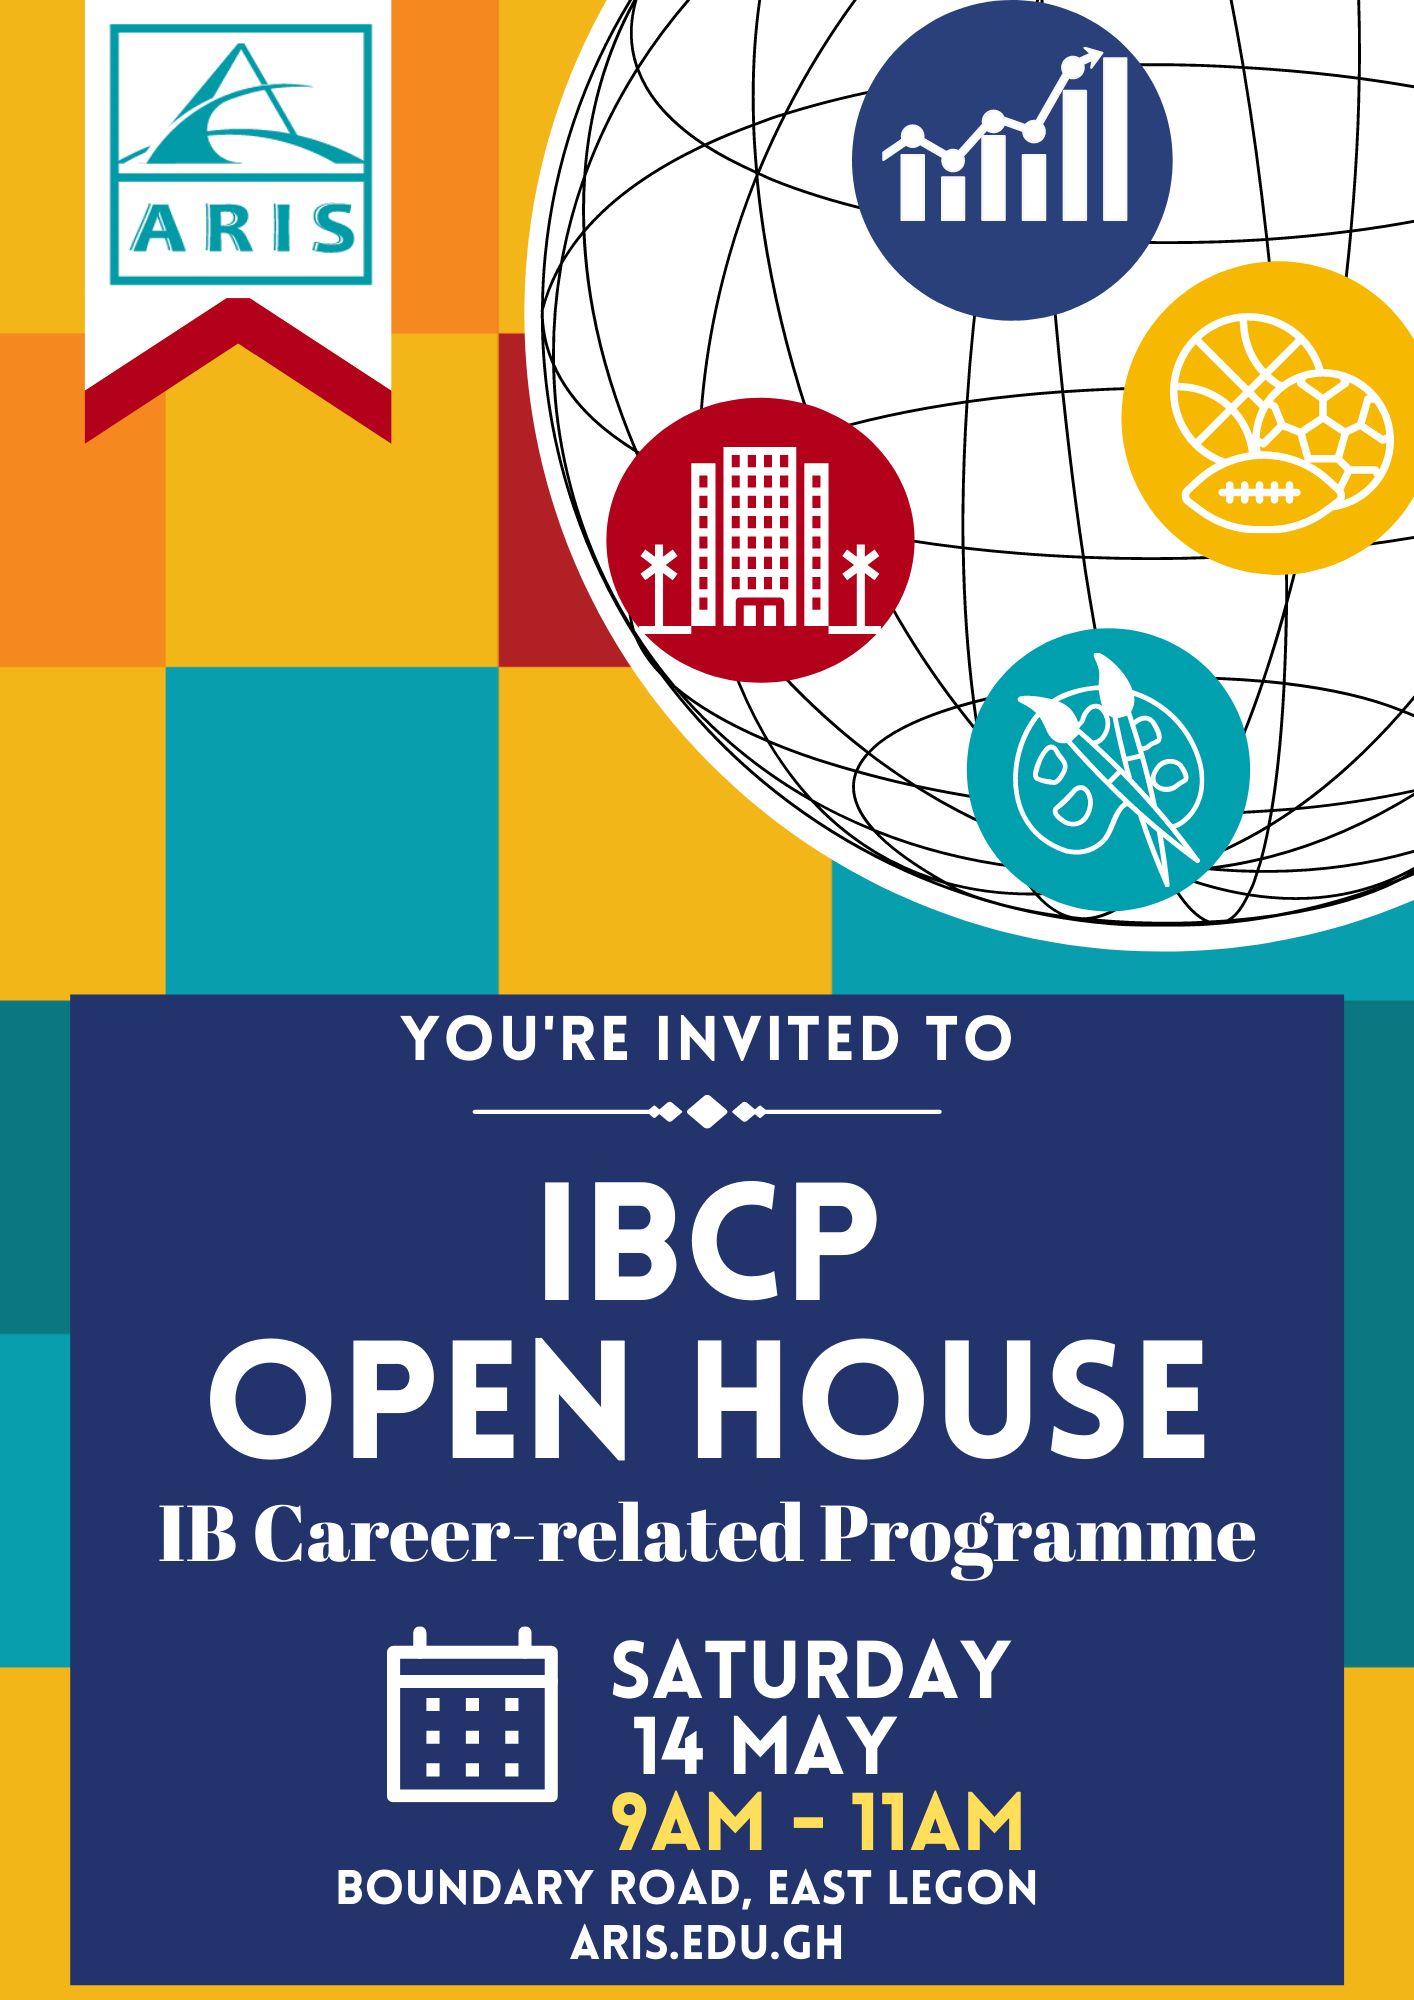 ARIS IBCP Open House